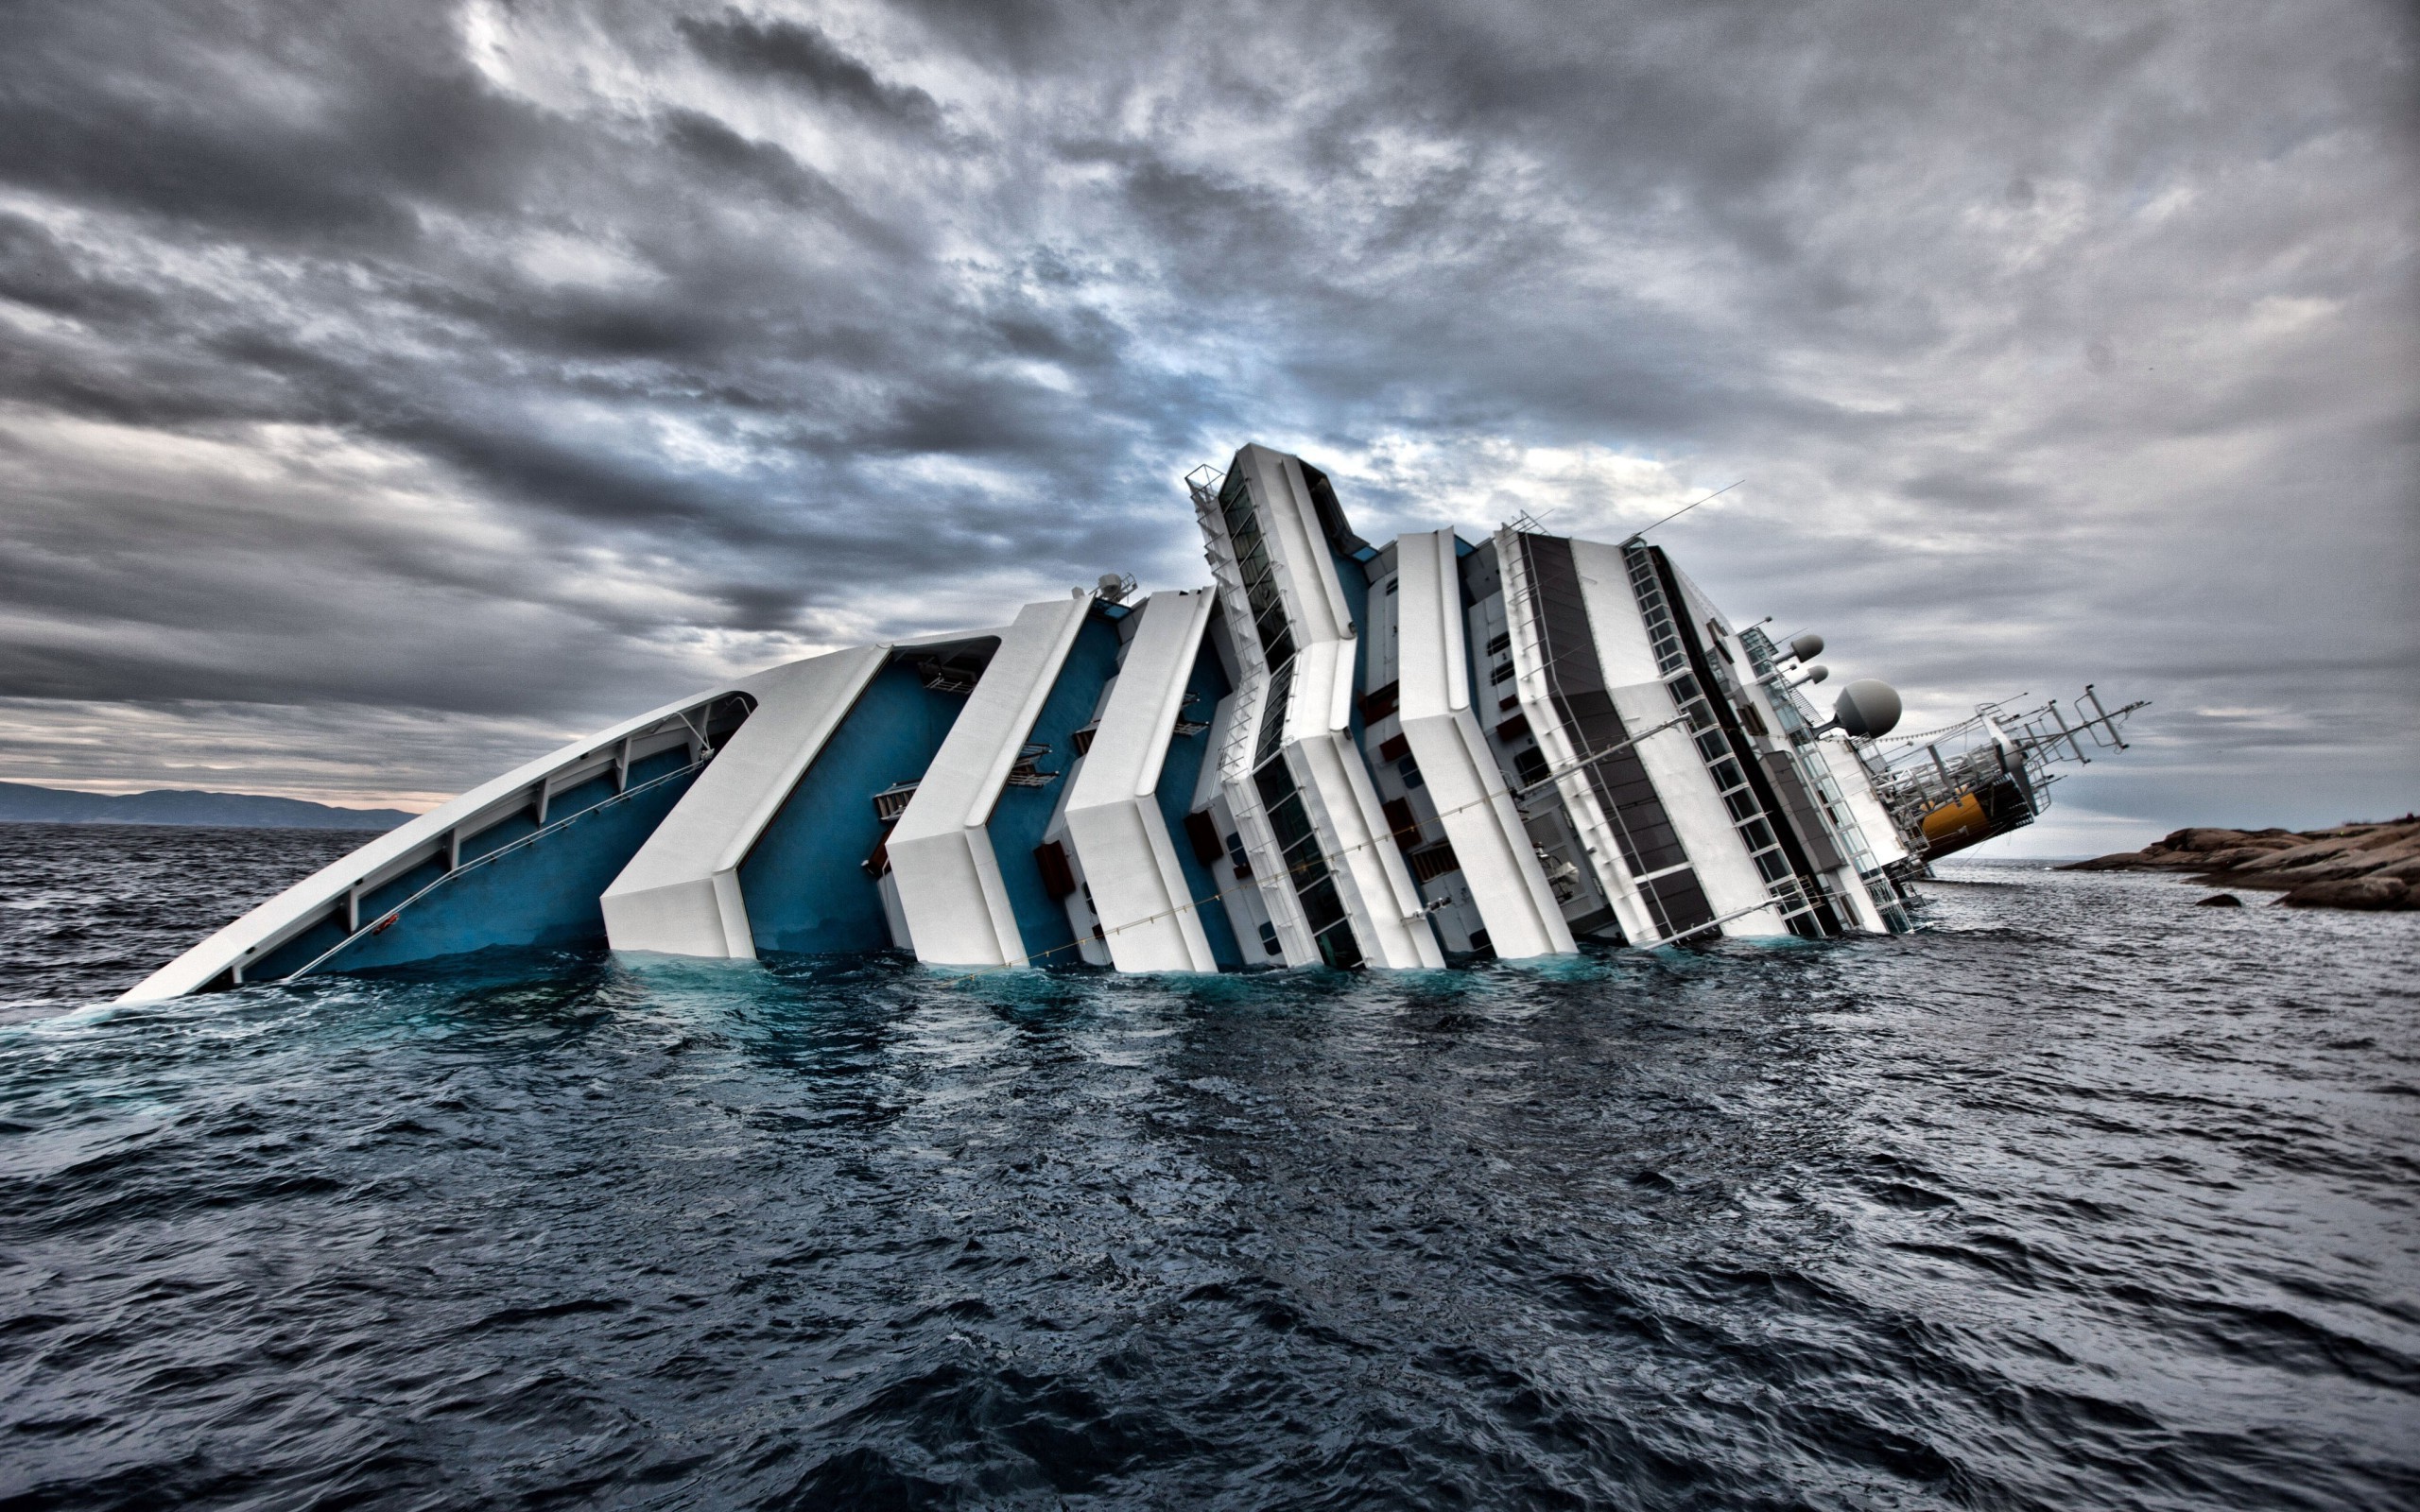 Costa Concordia, Disaster, Crash, Ship, Cruise ship, Sea, Clouds, Sinking ships Wallpaper